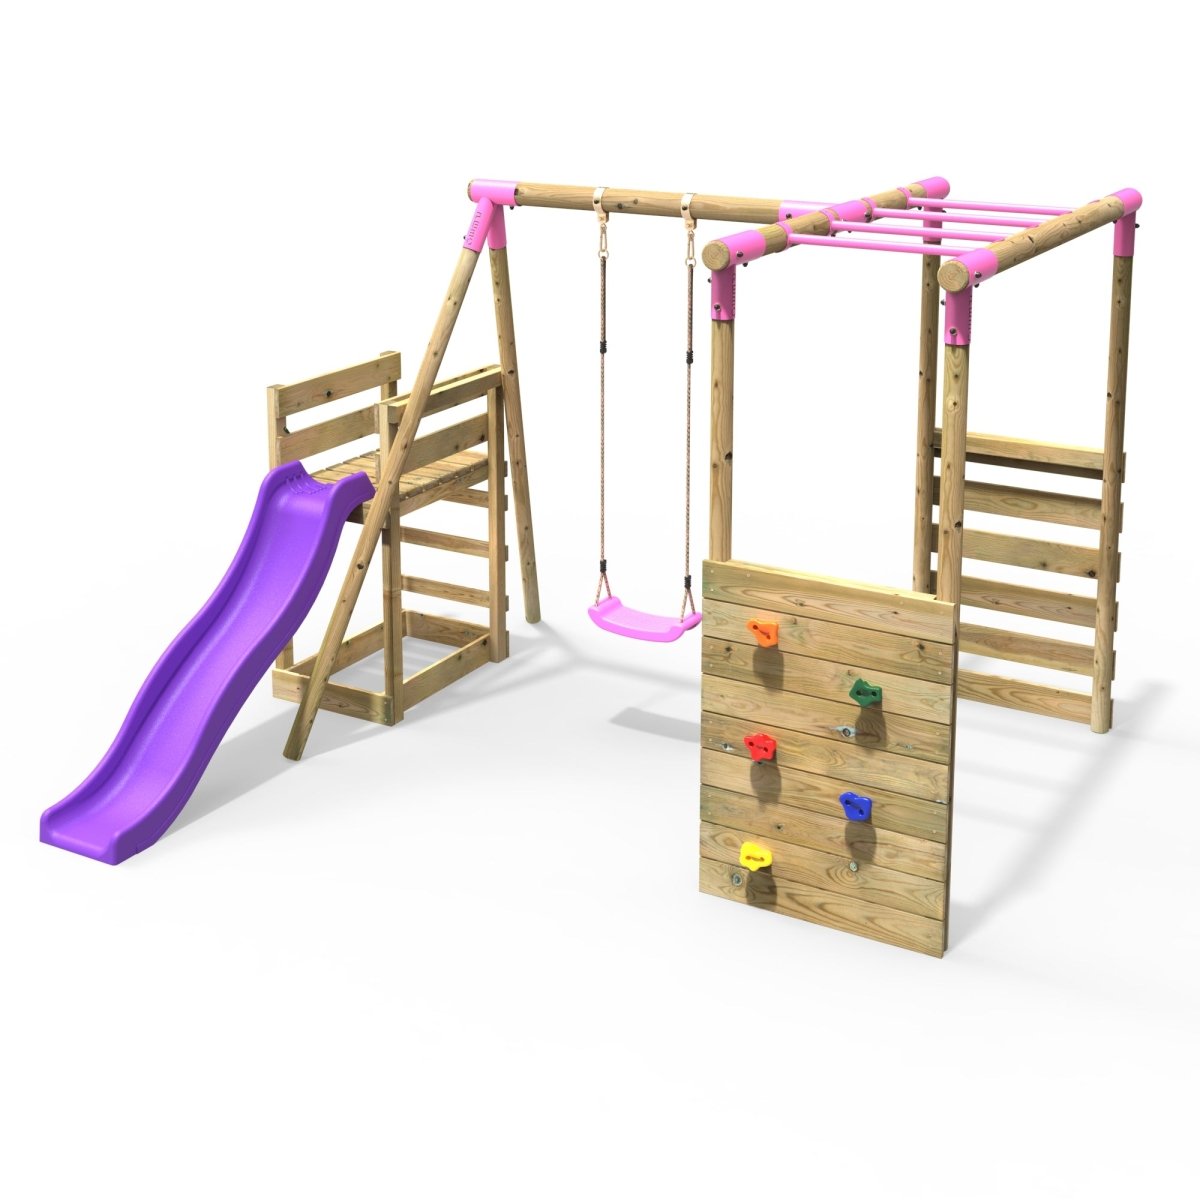 Rebo Wooden Swing Set with Monkey Bars plus Deck & 6ft Slide - Solar Pink